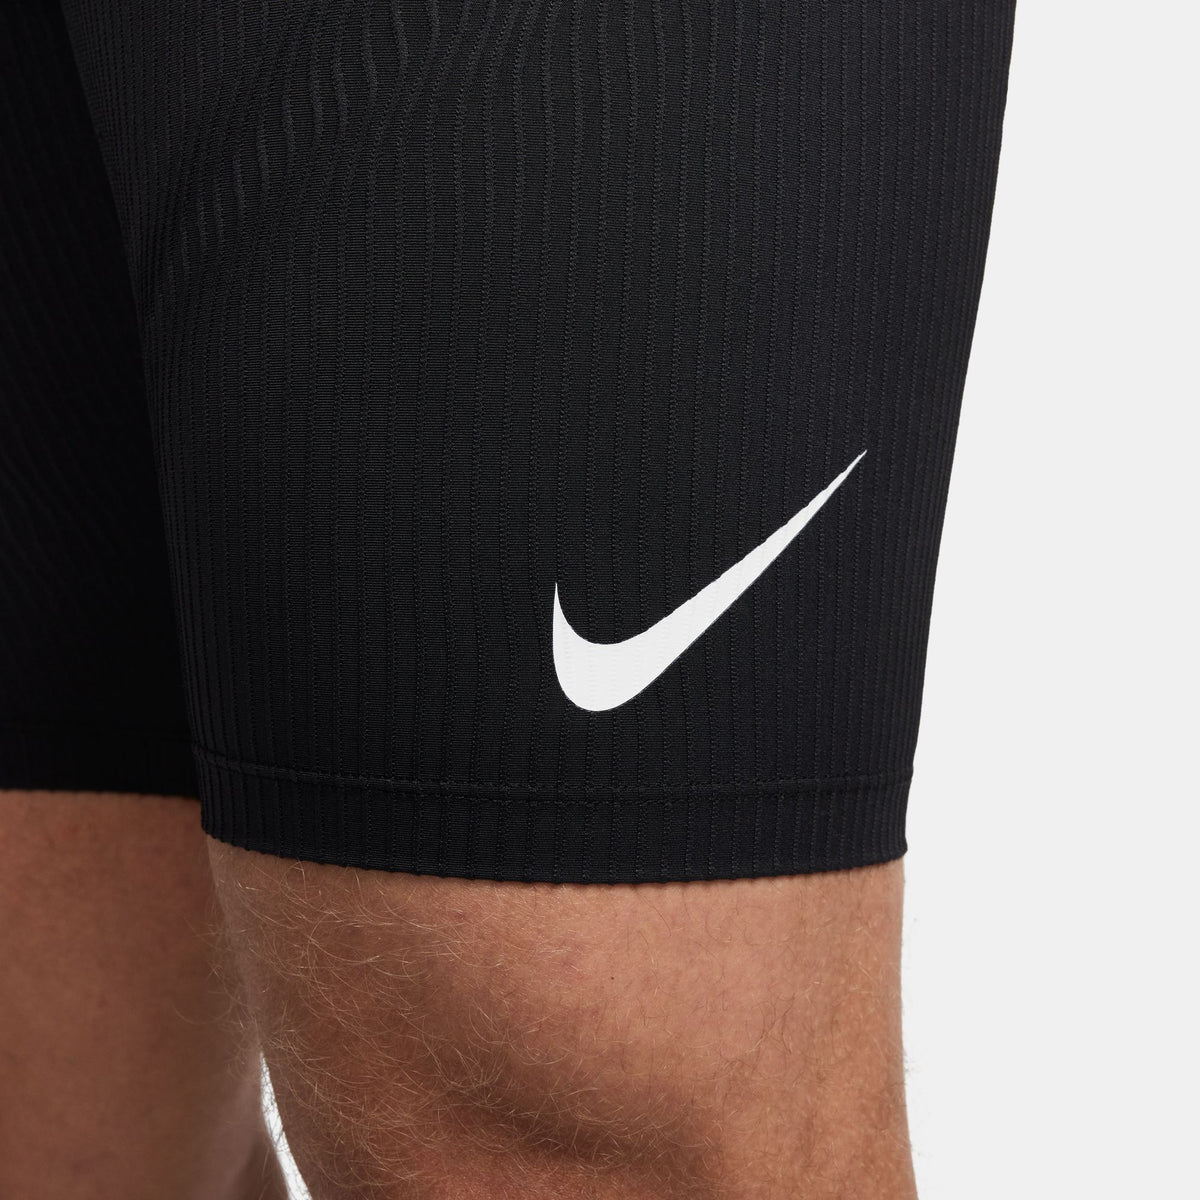 Nike Aeroswift 1/2 Tights Running Shorts - Men's Large $90.00